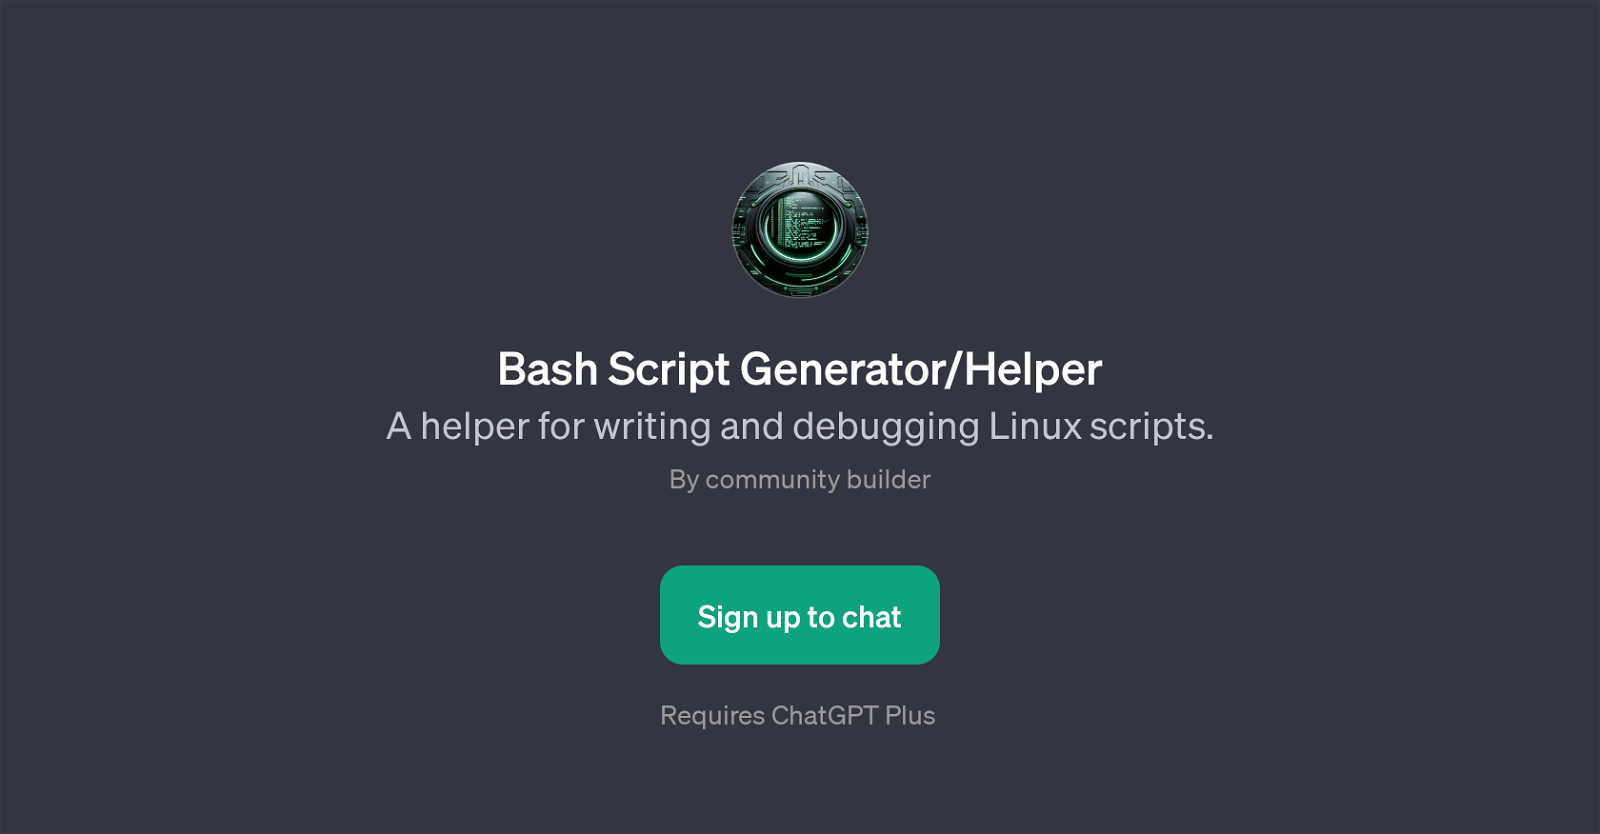 Bash Script Generator/Helper website